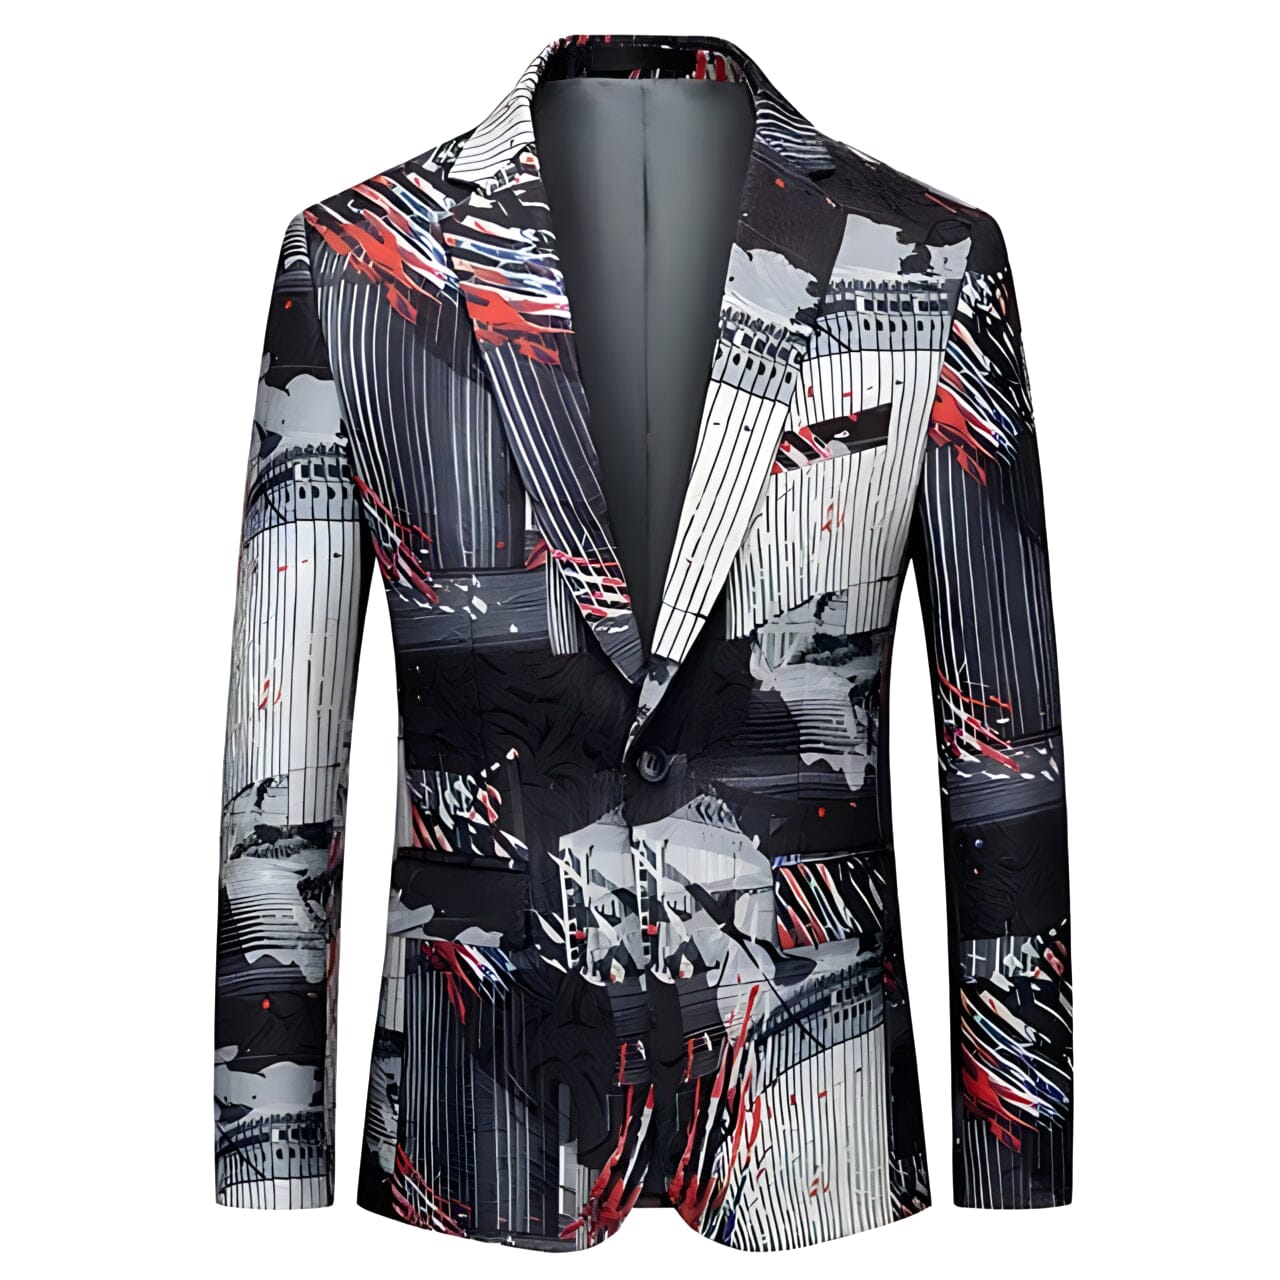 The Monelo Jacquard Slim Fit Blazer Suit Jacket WD Styles XS 